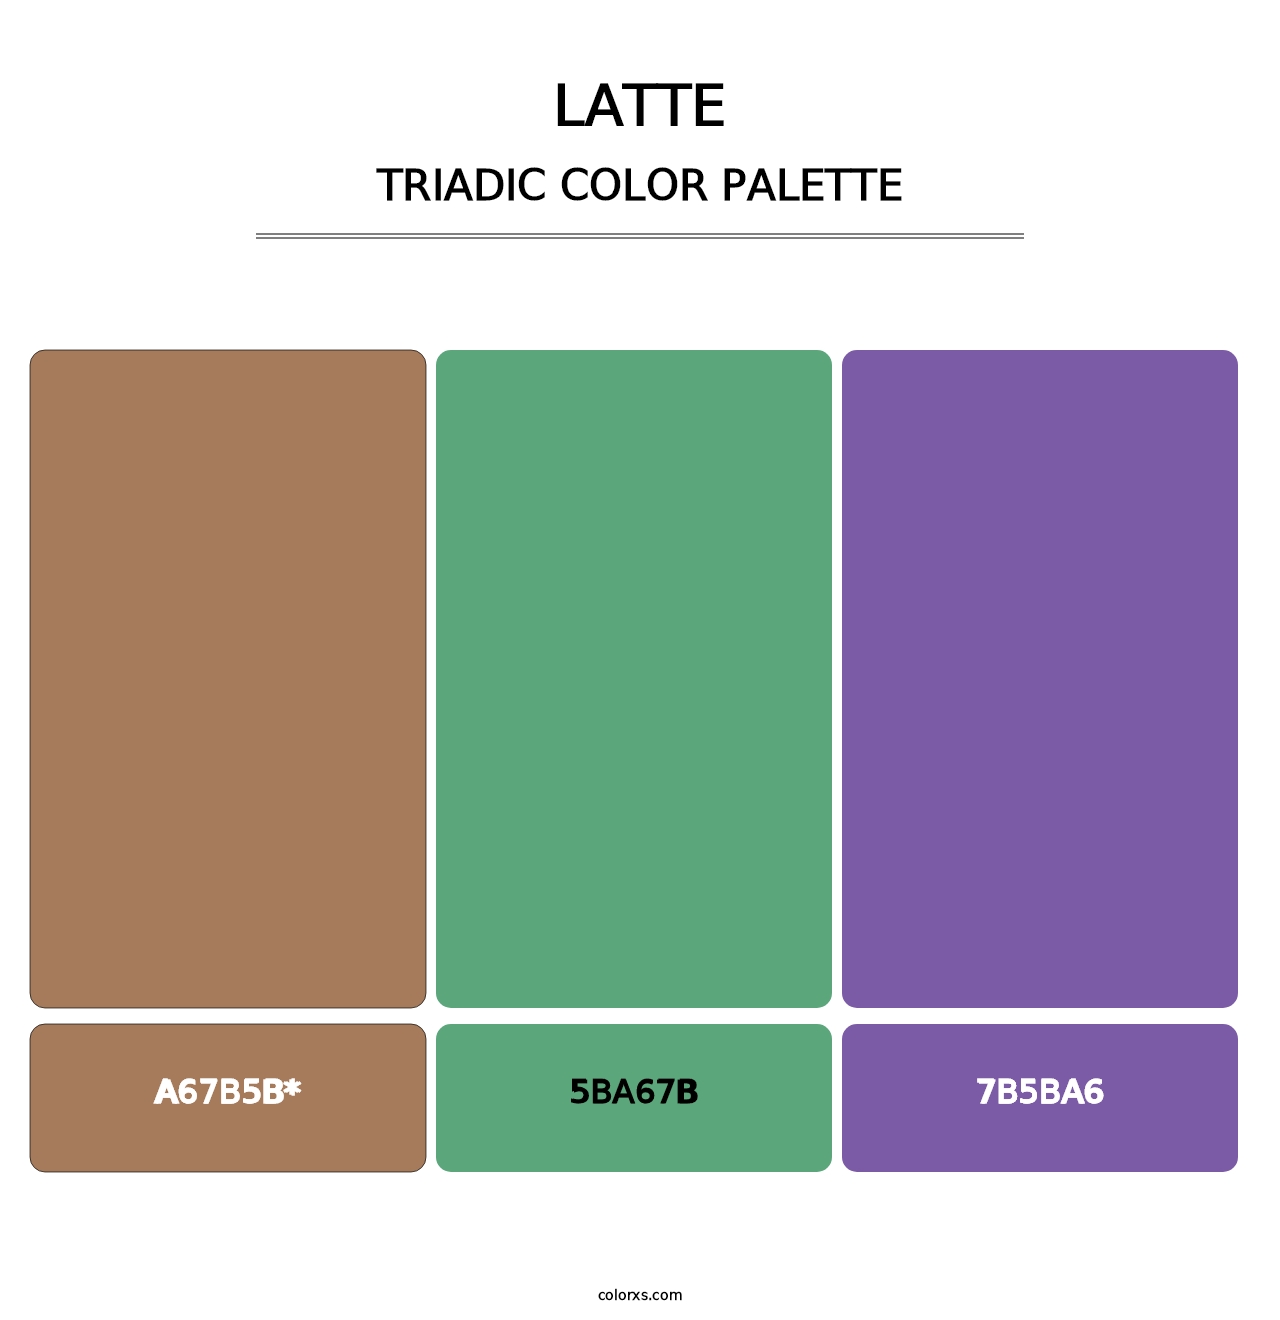 Latte - Triadic Color Palette